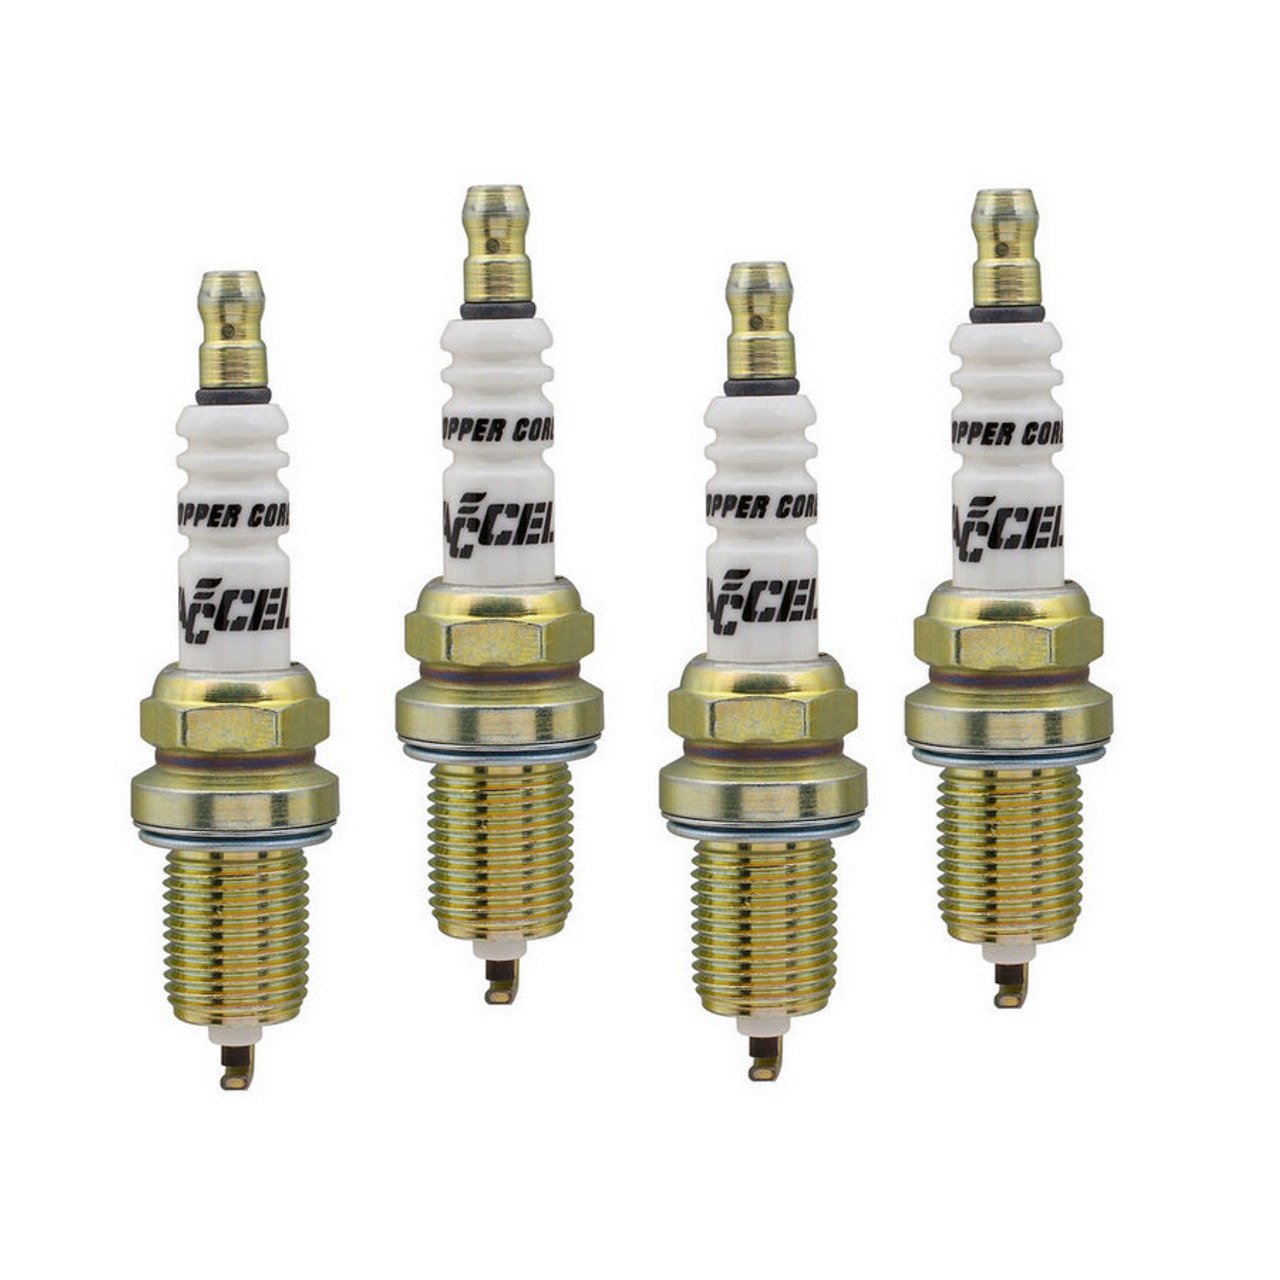 ACL0736-4, Spark Plug, 14 mm Thread, 0.750 in Reach, Gasket Seat, Resistor, Set of 4